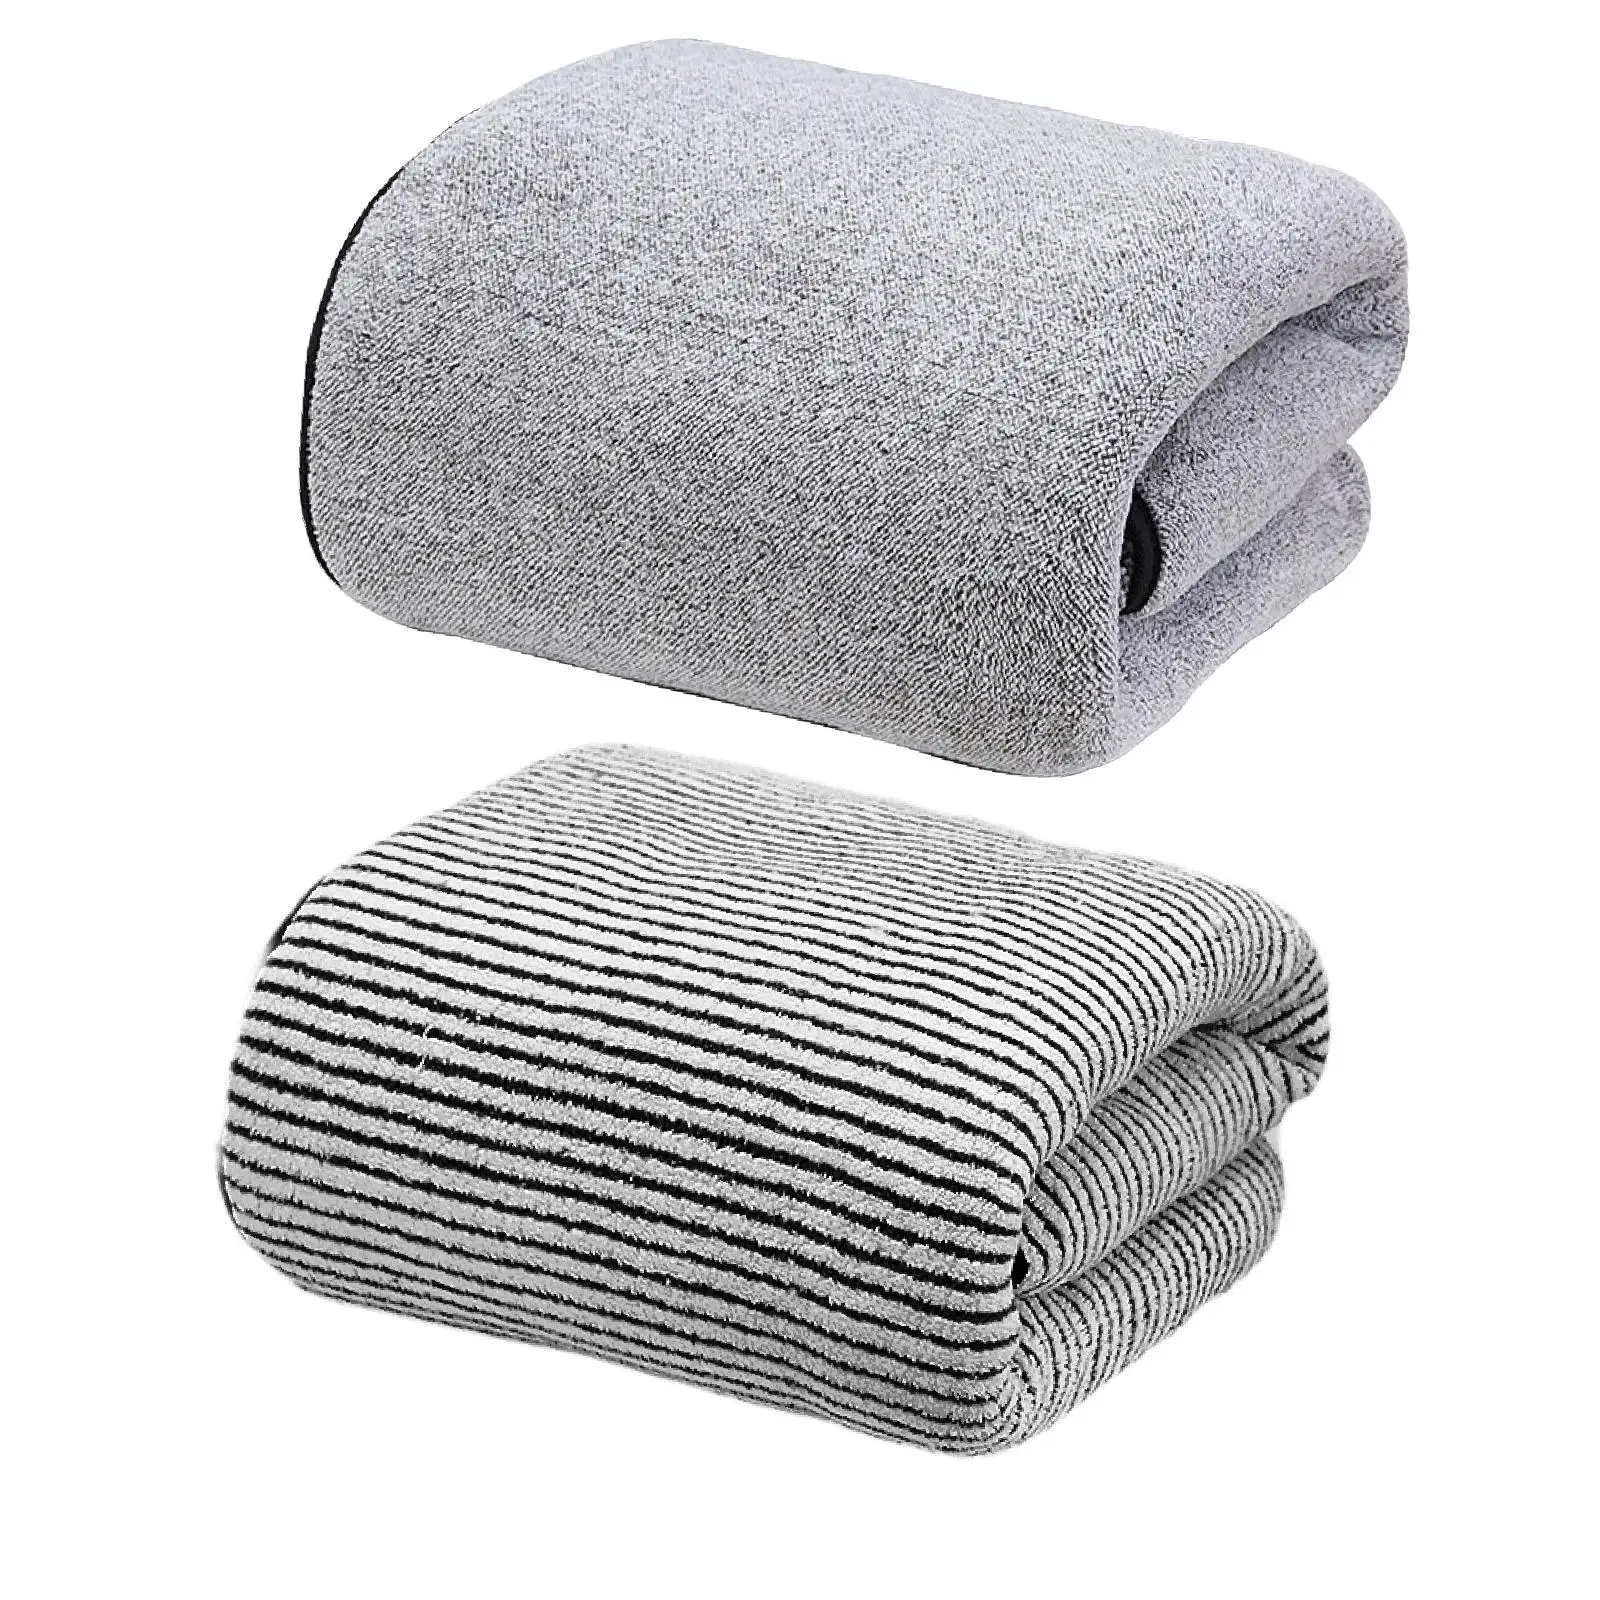 

Bath Towel Microfiber Lightweight 140x70cm Highly Absorbent Towel Quick Drying Towel for Body Shower Beach Bathroom Travel Yoga